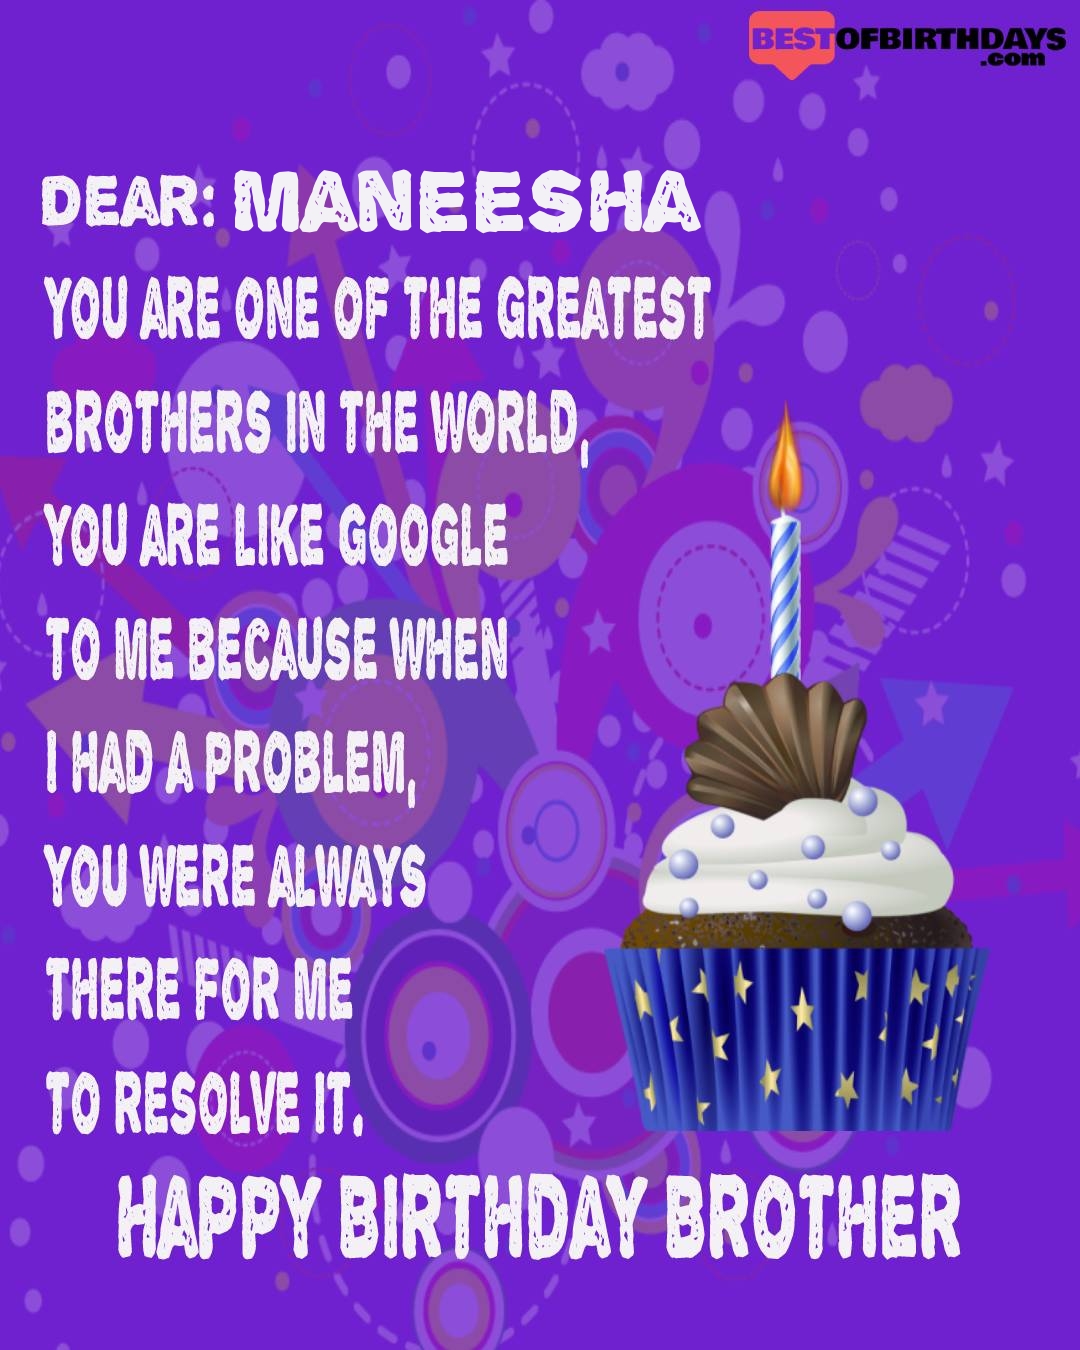 Happy birthday maneesha bhai brother bro